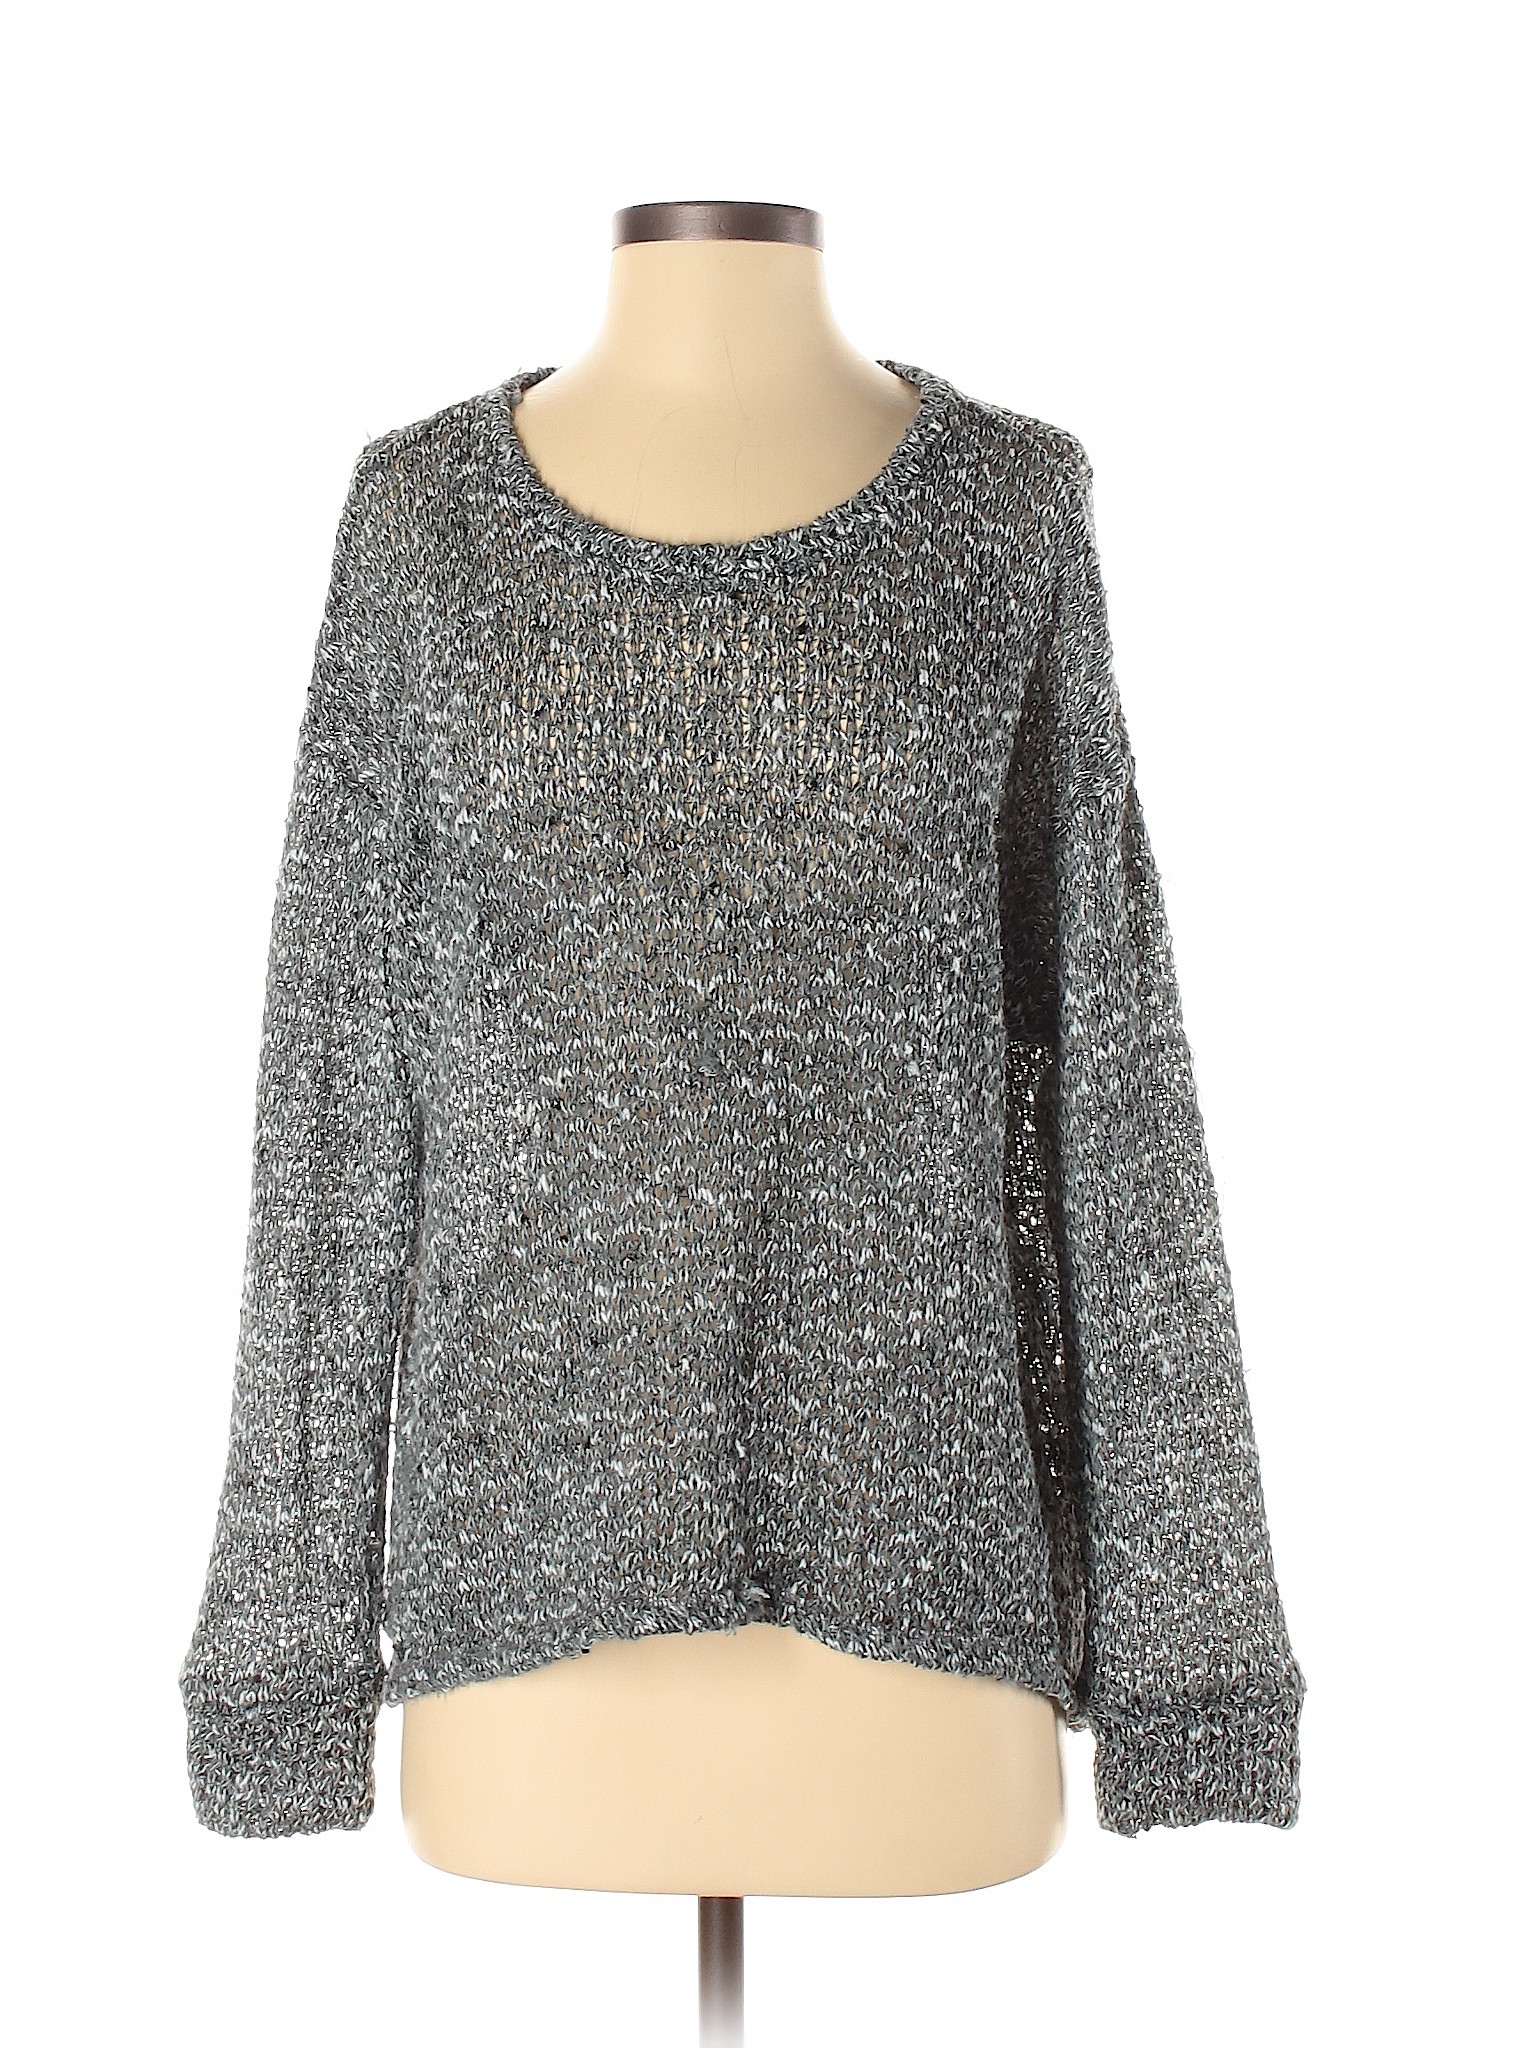 Apt. 9 Women Gray Pullover Sweater M | eBay